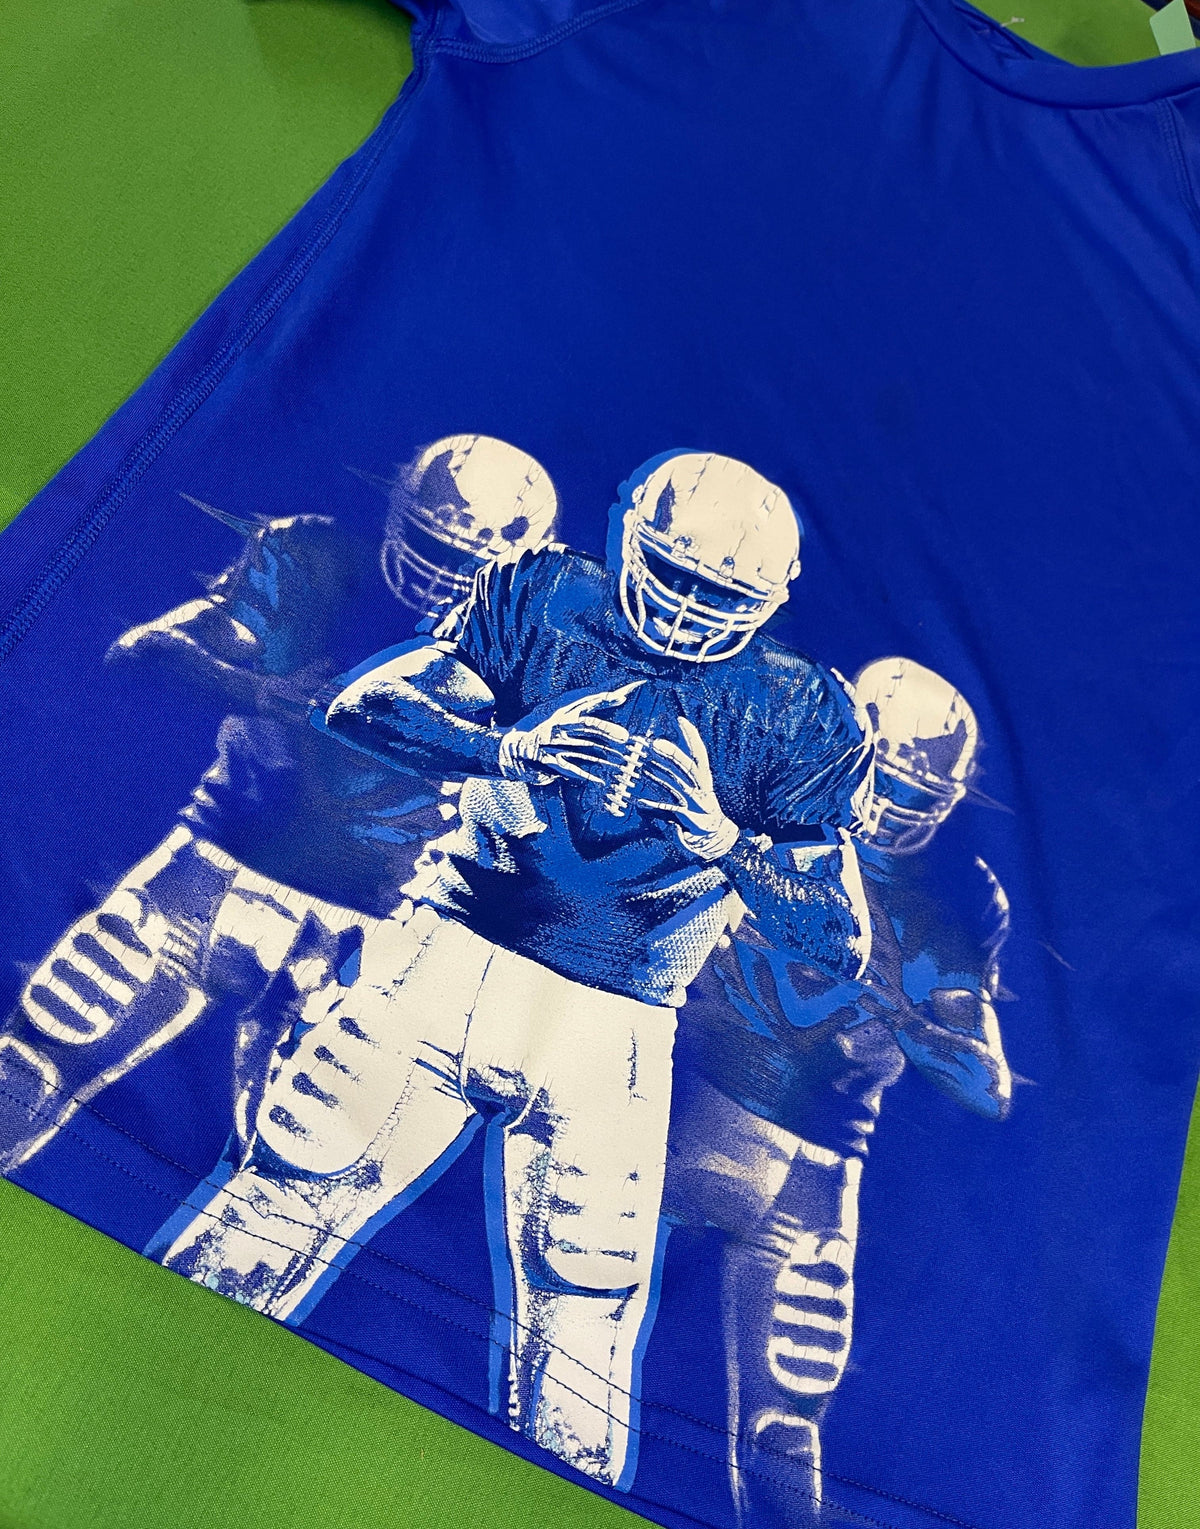 American Football Champion Blue T-Shirt Youth Small/Medium 8-10